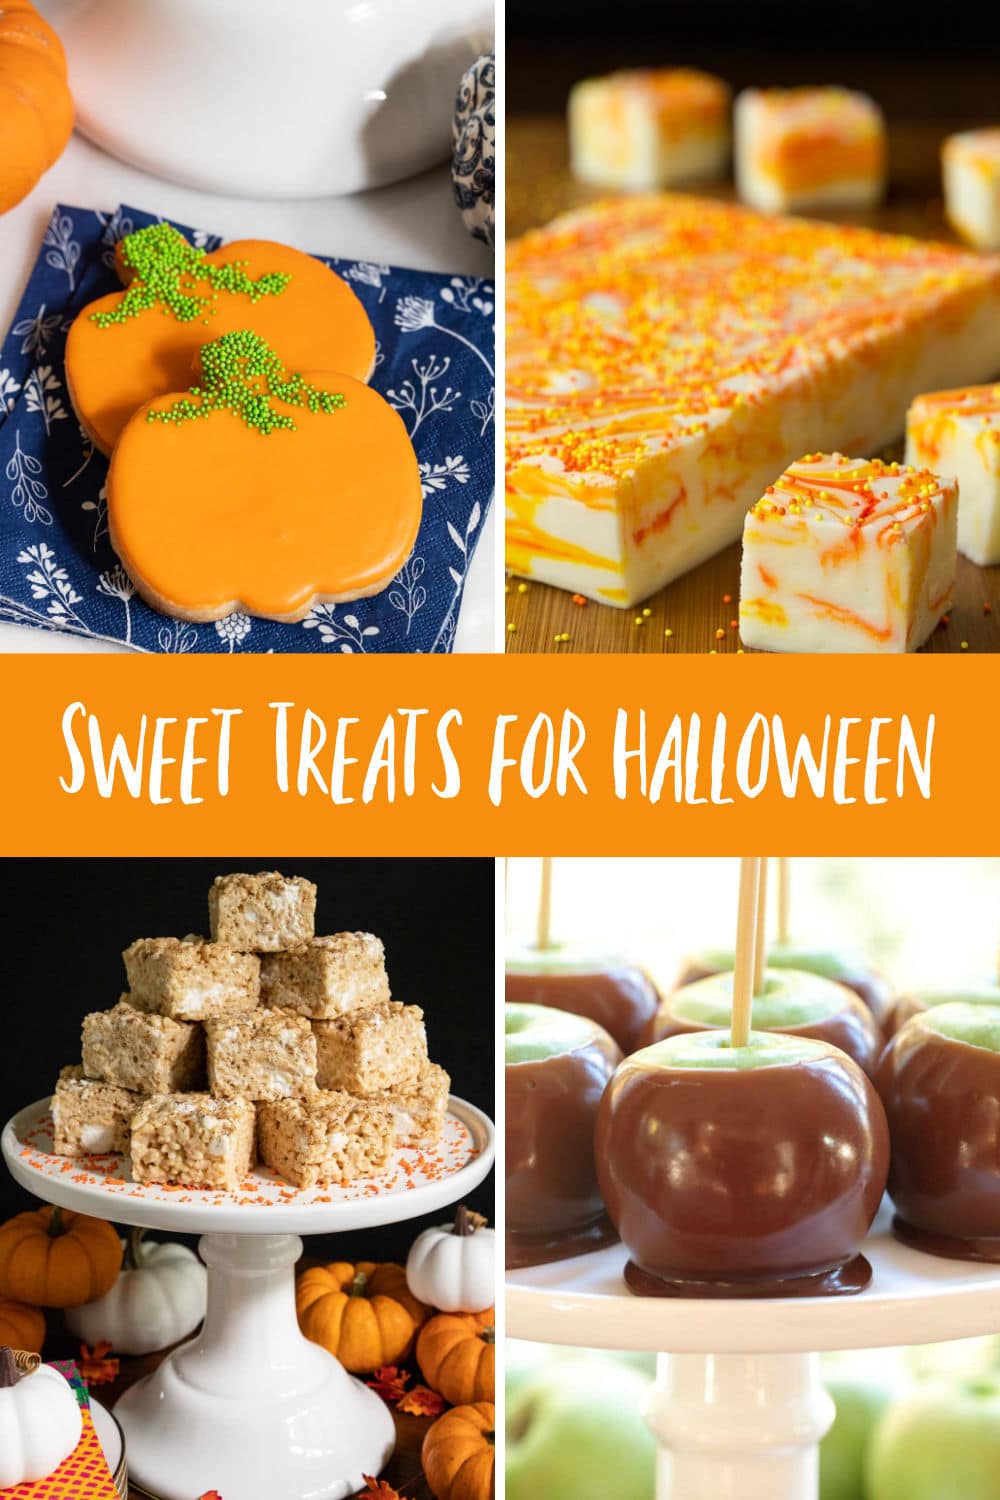 No Tricks, Just Treats! Fun, Festive Recipes for Halloween